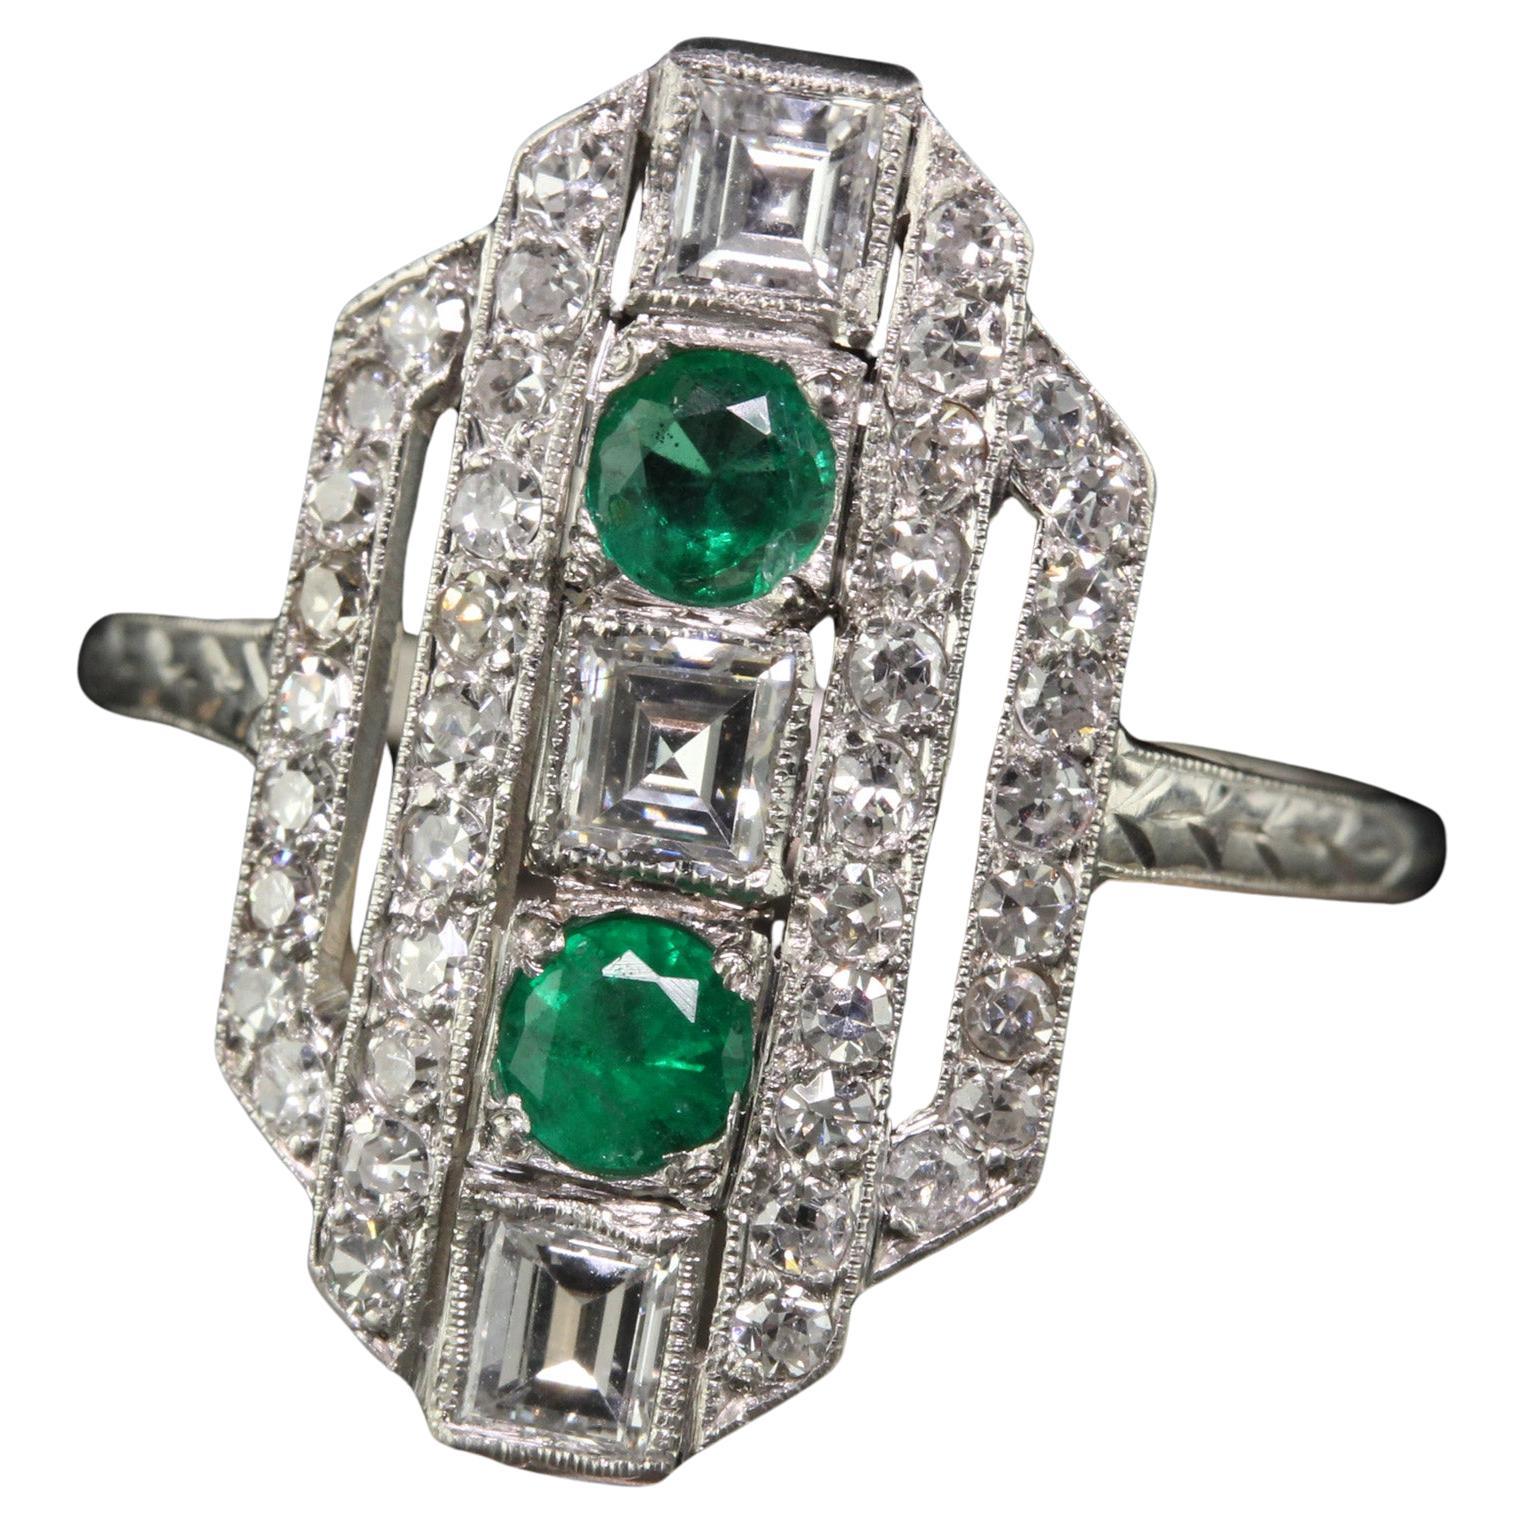 Antique Art Deco Platinum Carre Cut Diamond and Emerald Shield Ring - Size 6 3/4